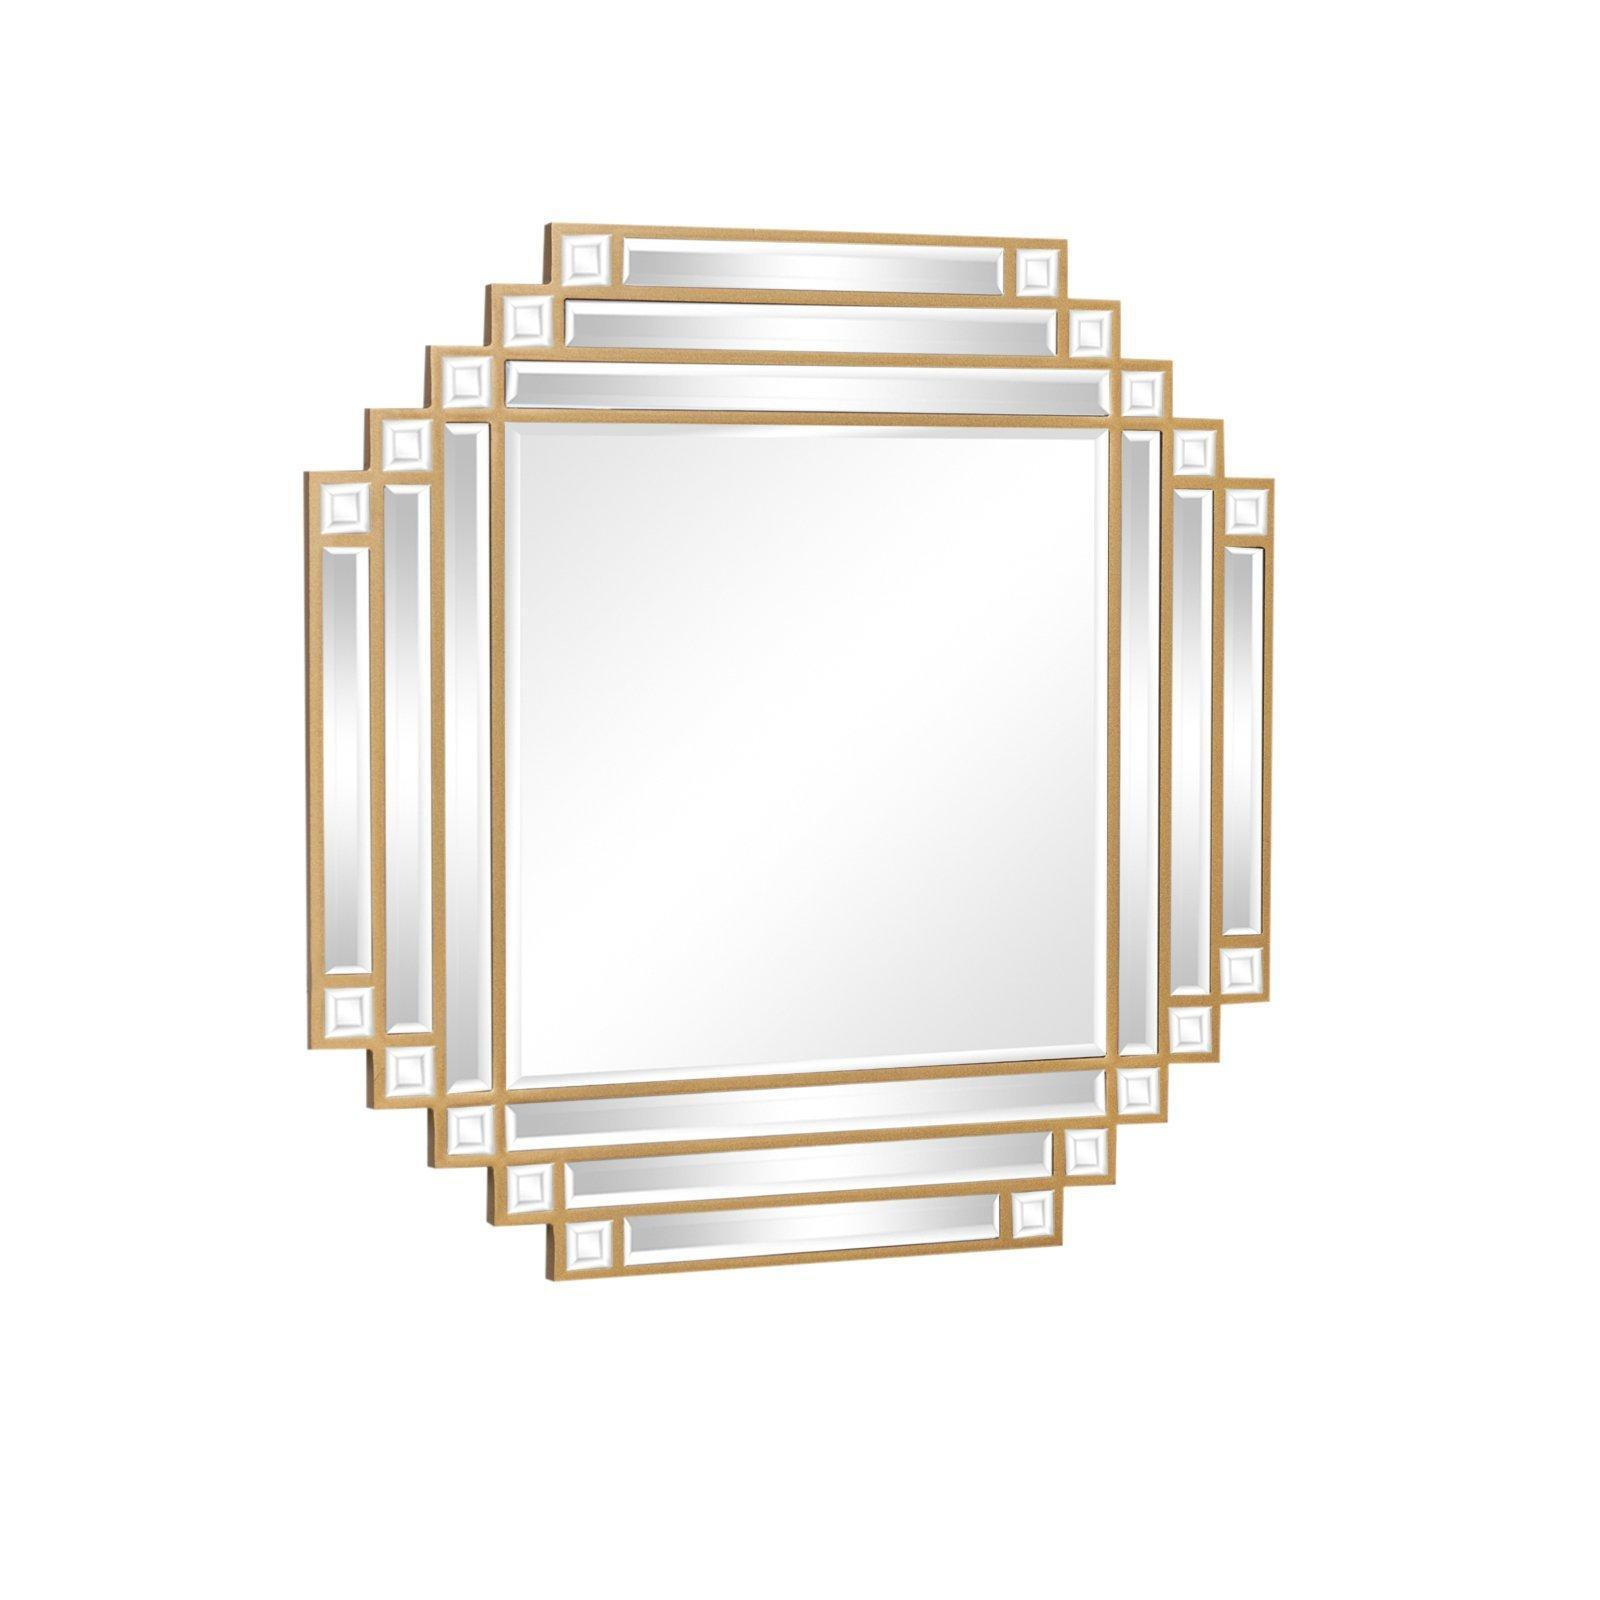 Square Gold Art Deco Fan Wall Mirror 55cm X 55cm - image 1